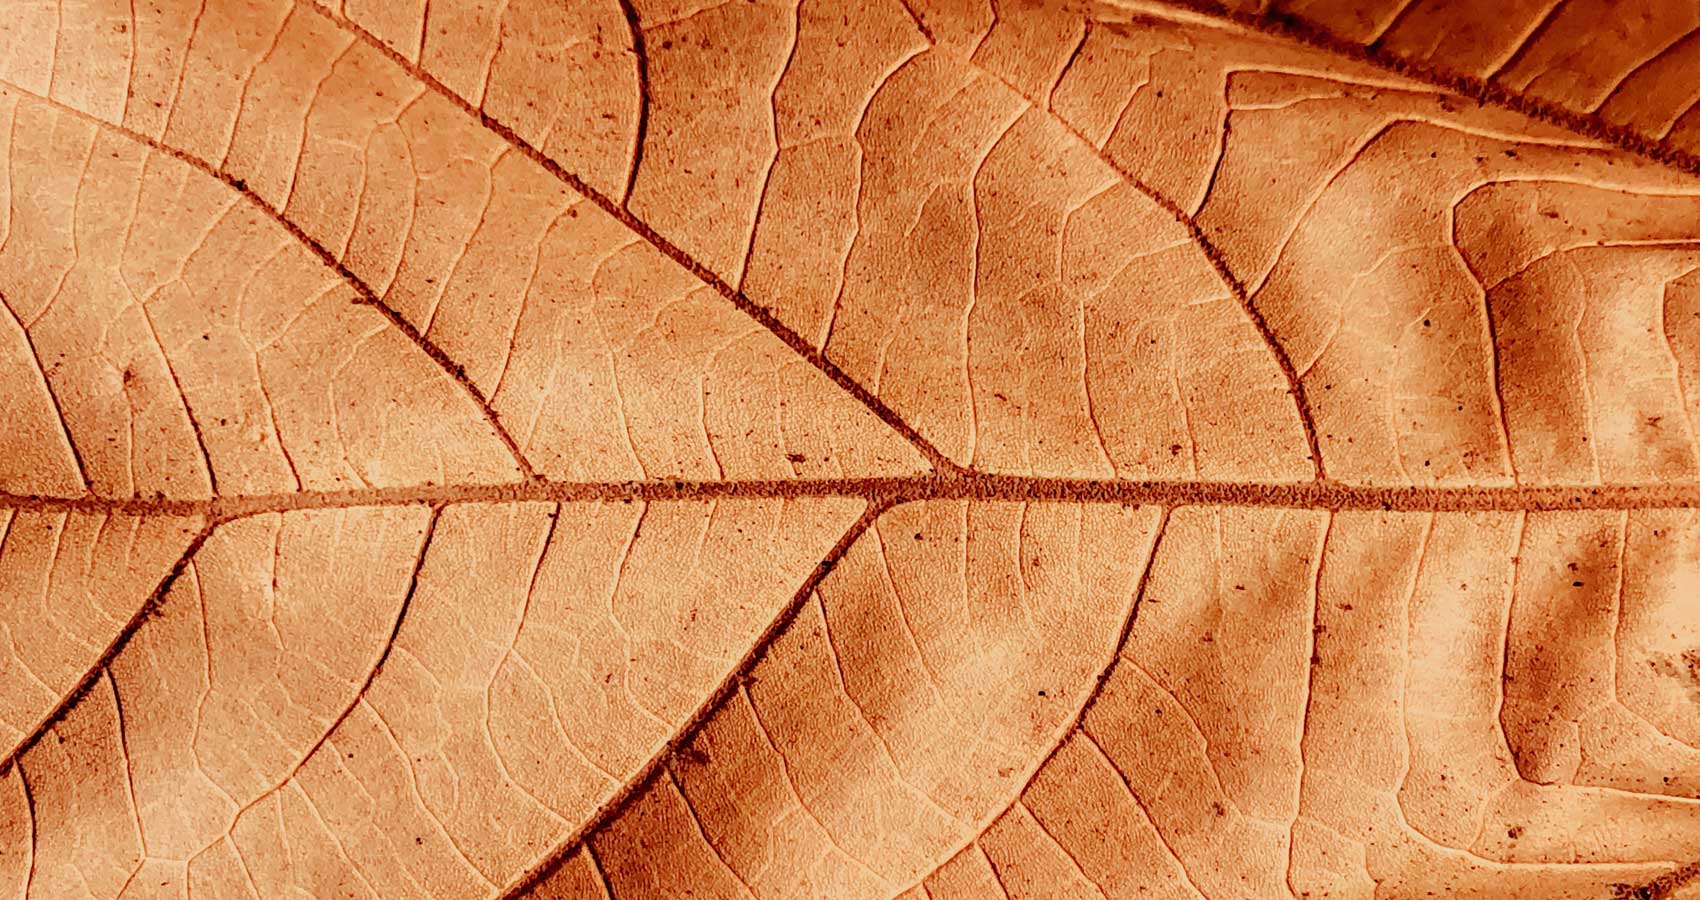 A Leaf, a poem written by Kalpna Singh-Chitnis at Spillwords.com